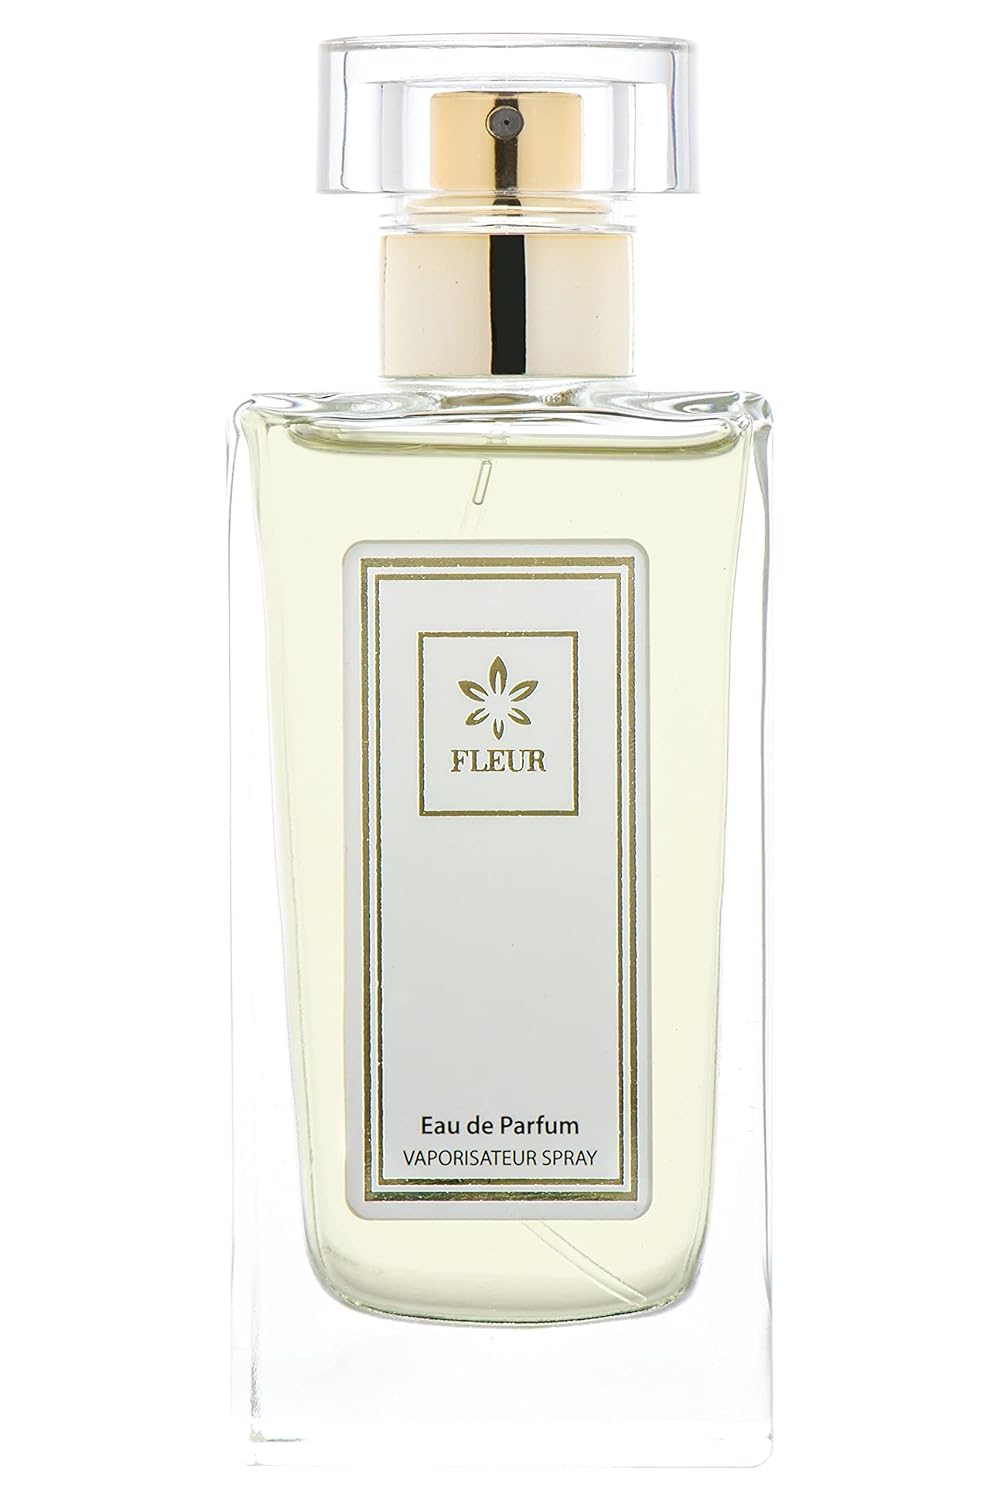 Fleur No 1145 Inspired by Paradox Parfum-Dupes, Women \ 's fragrance twins, Edp fragrance spray 50 ml